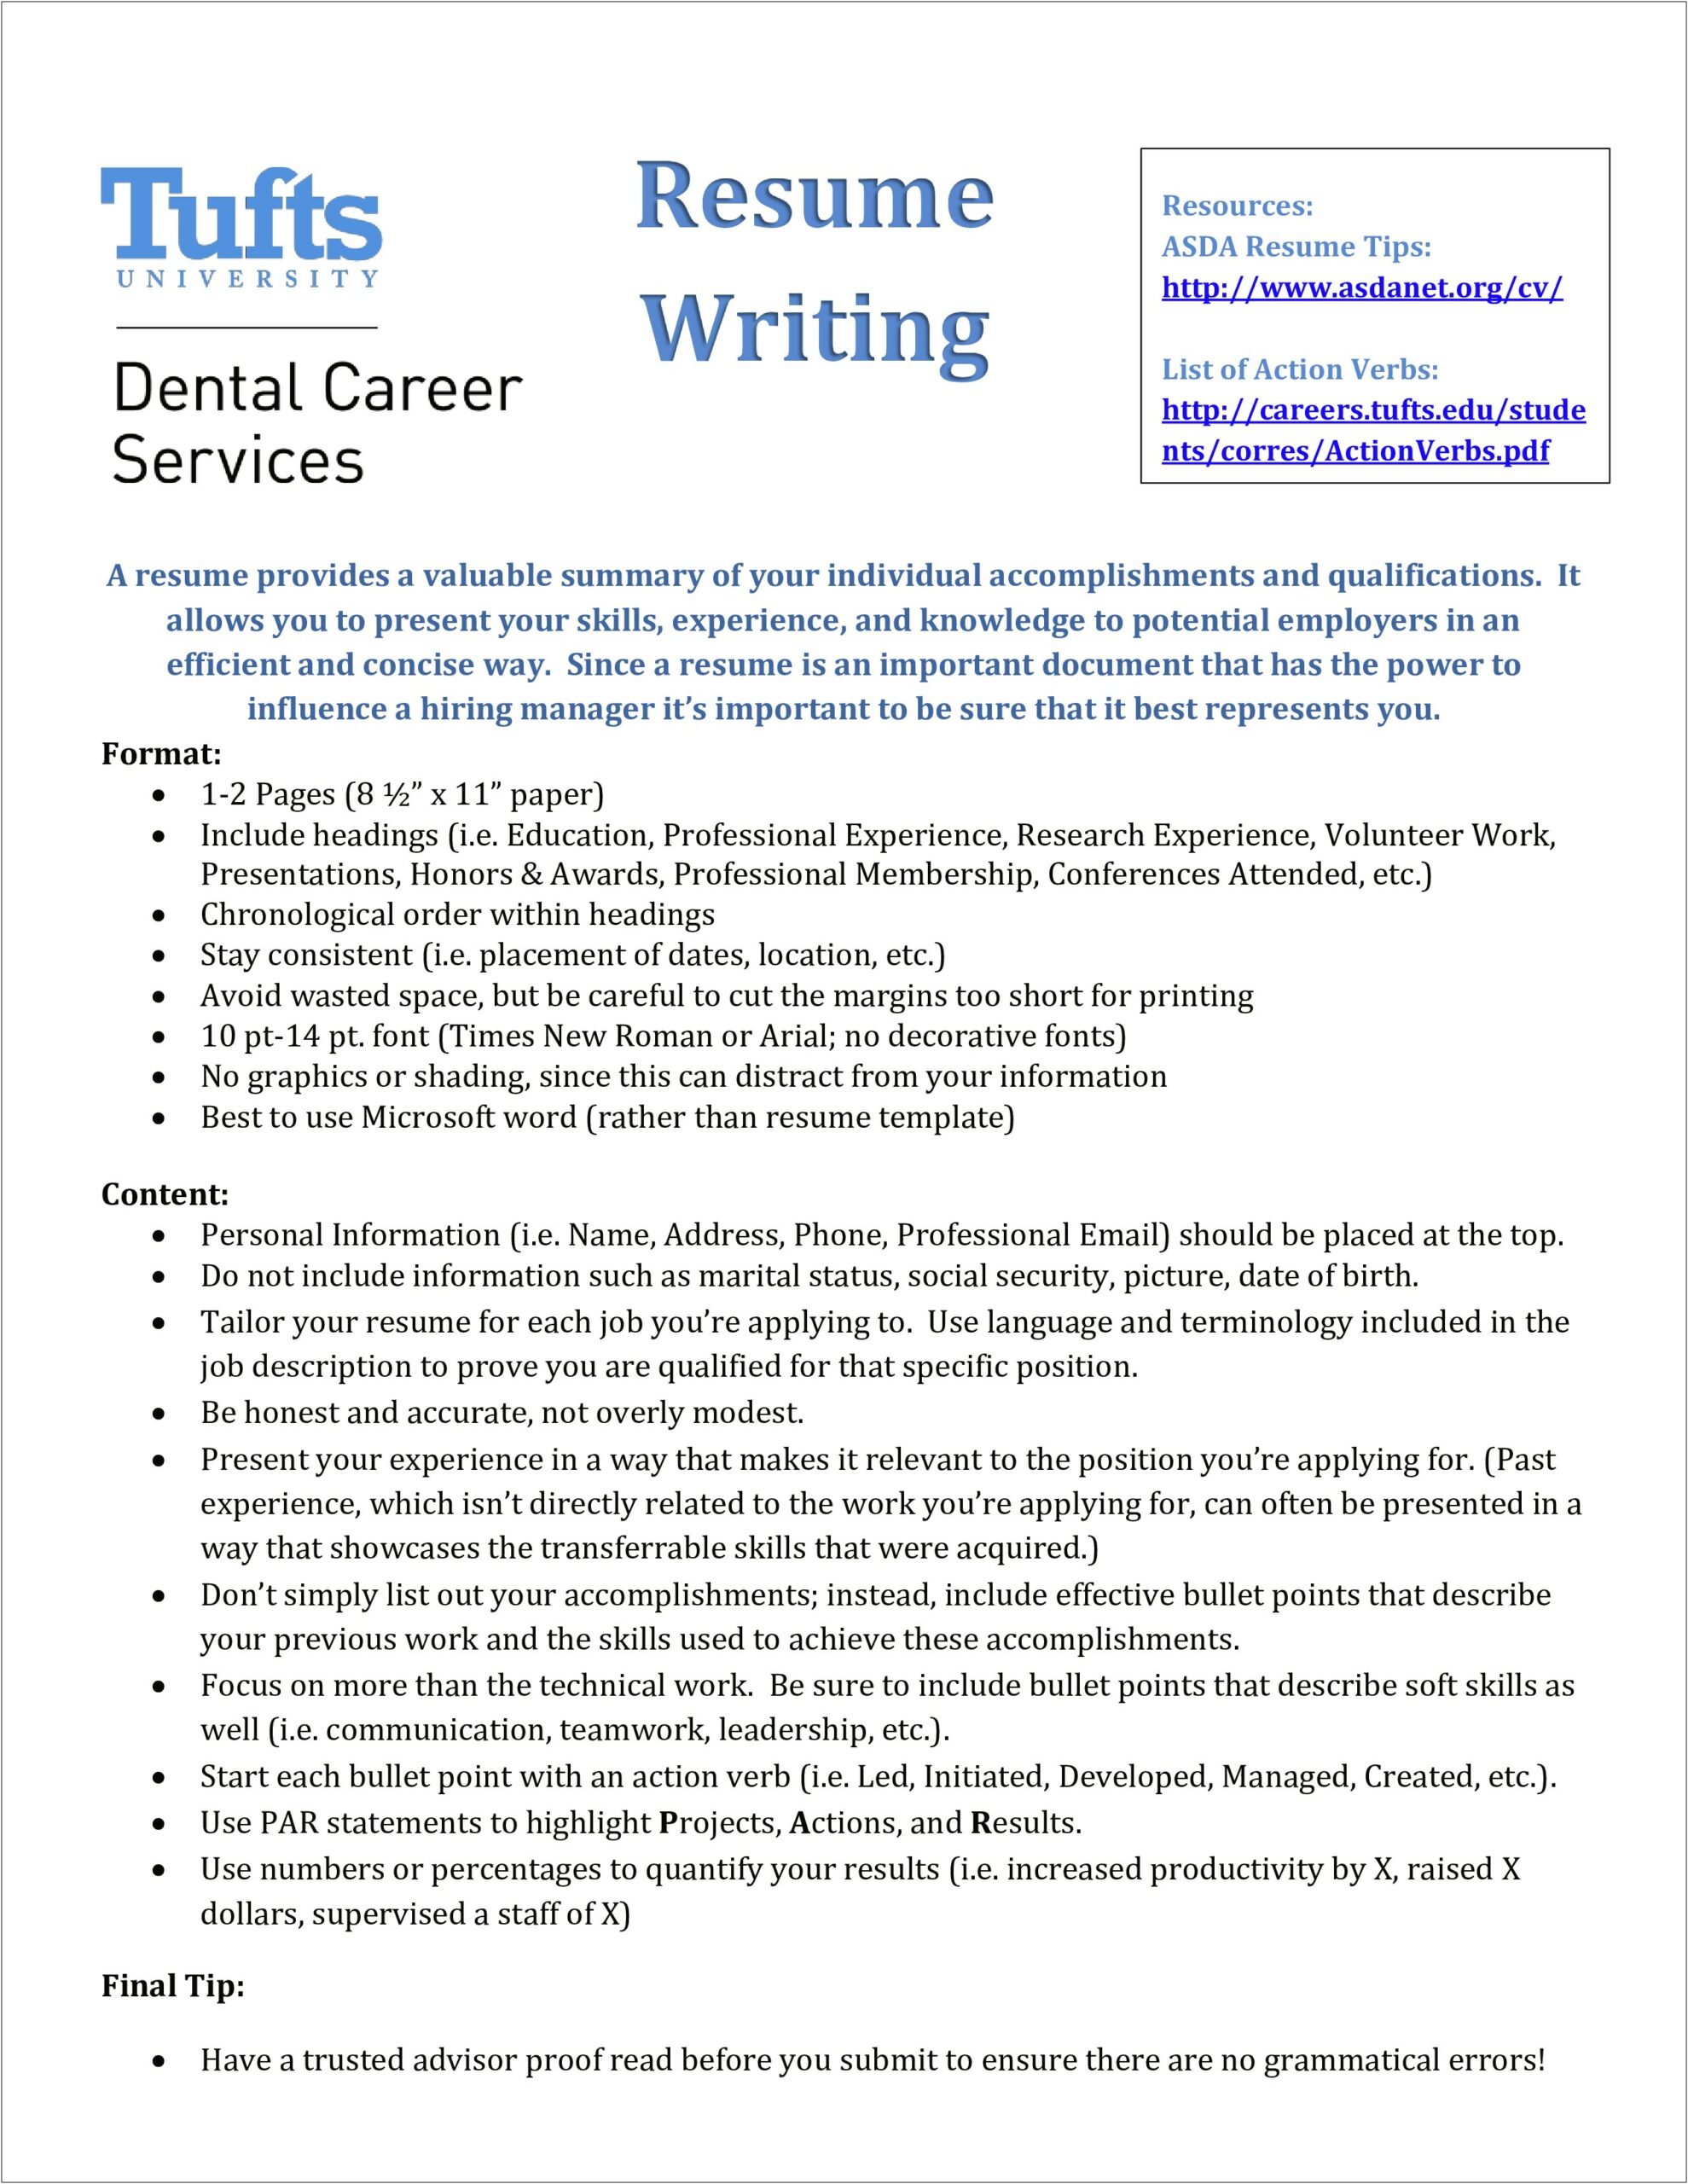 Resume Writing Service For Dentist Seeking Job